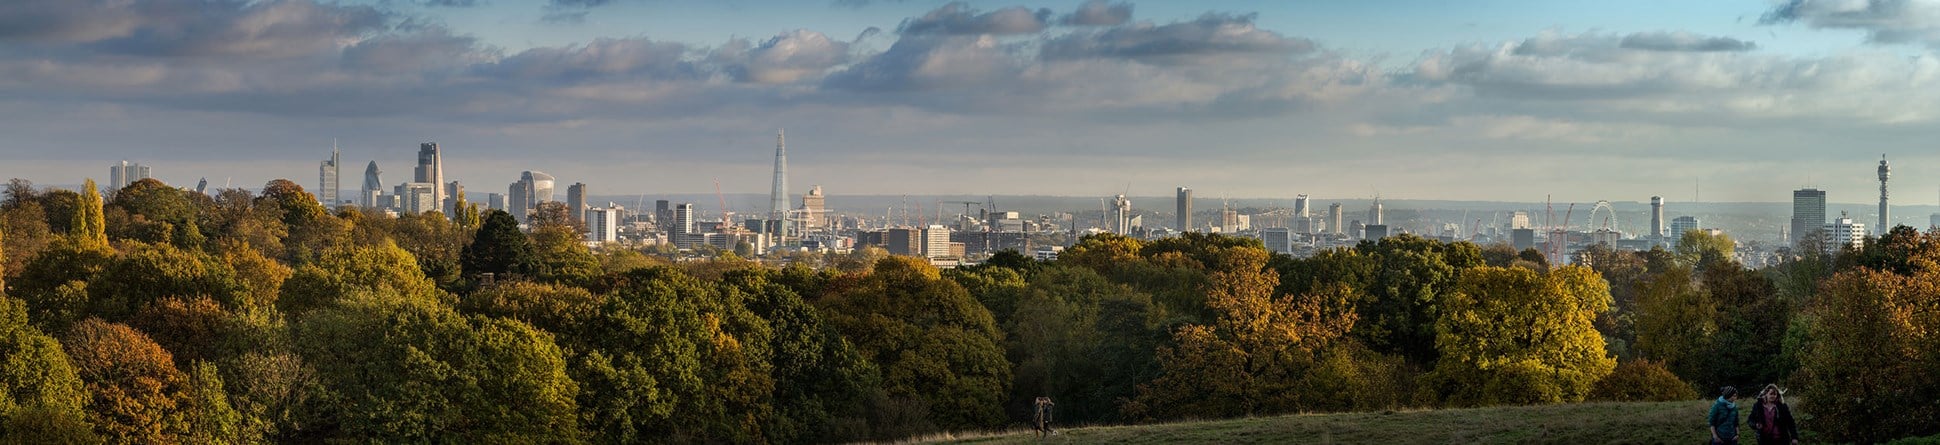 Image of London's skyline from Hampstead Heath